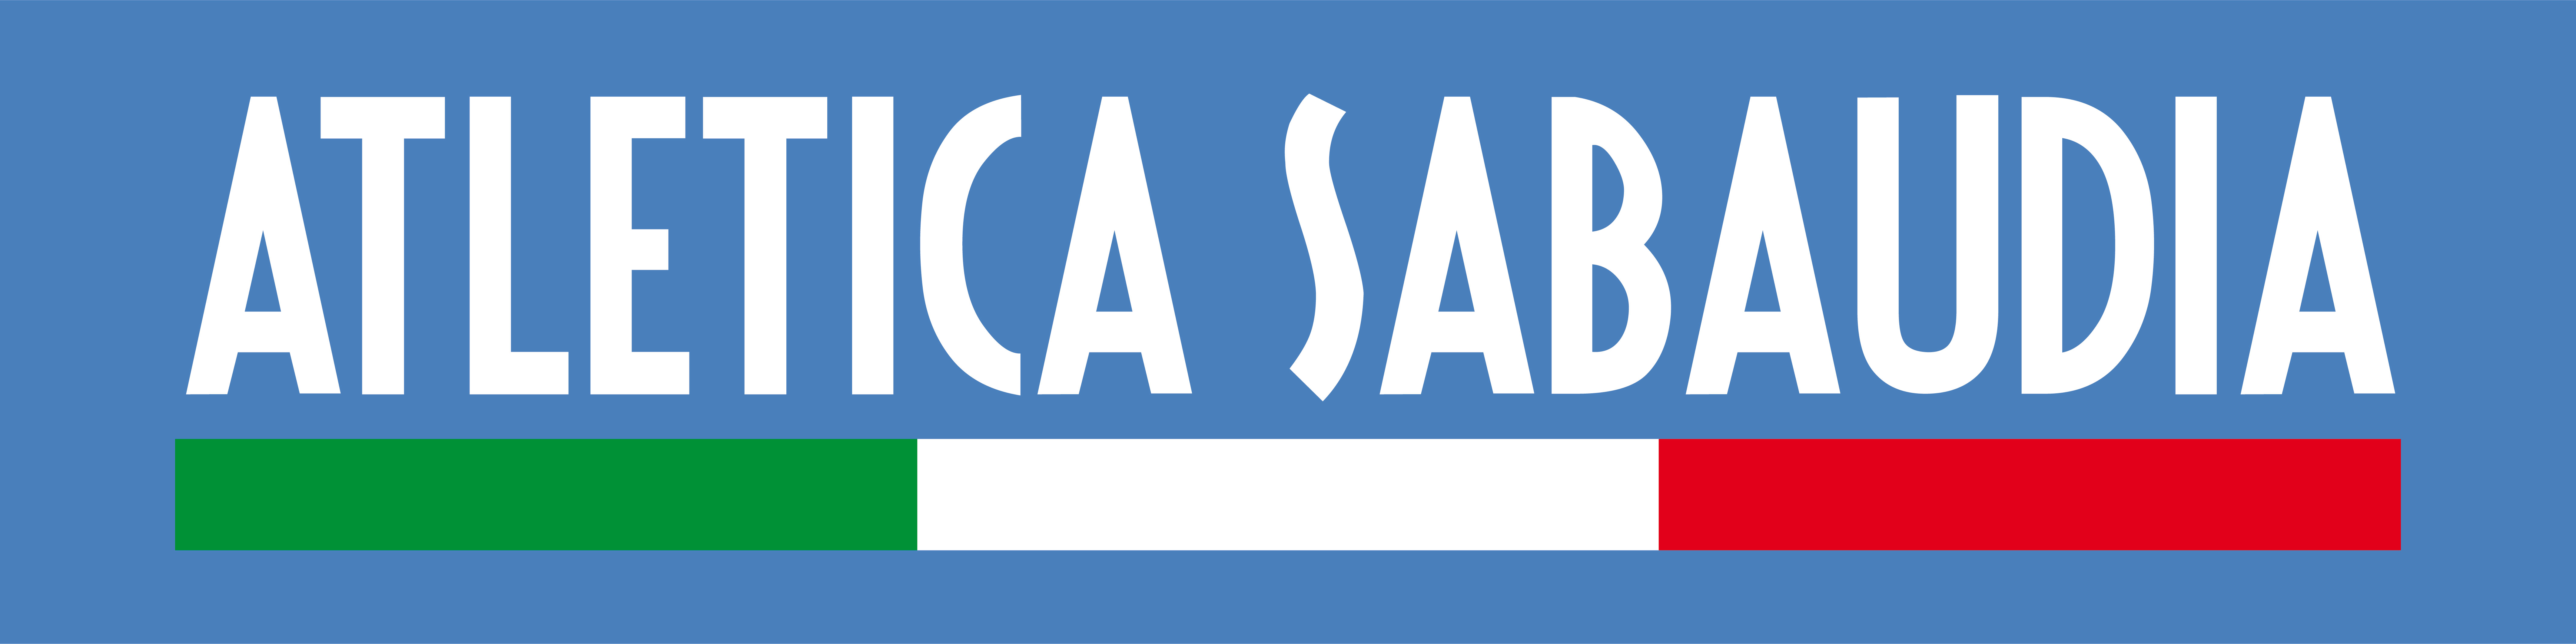 logo atletica sabaudia